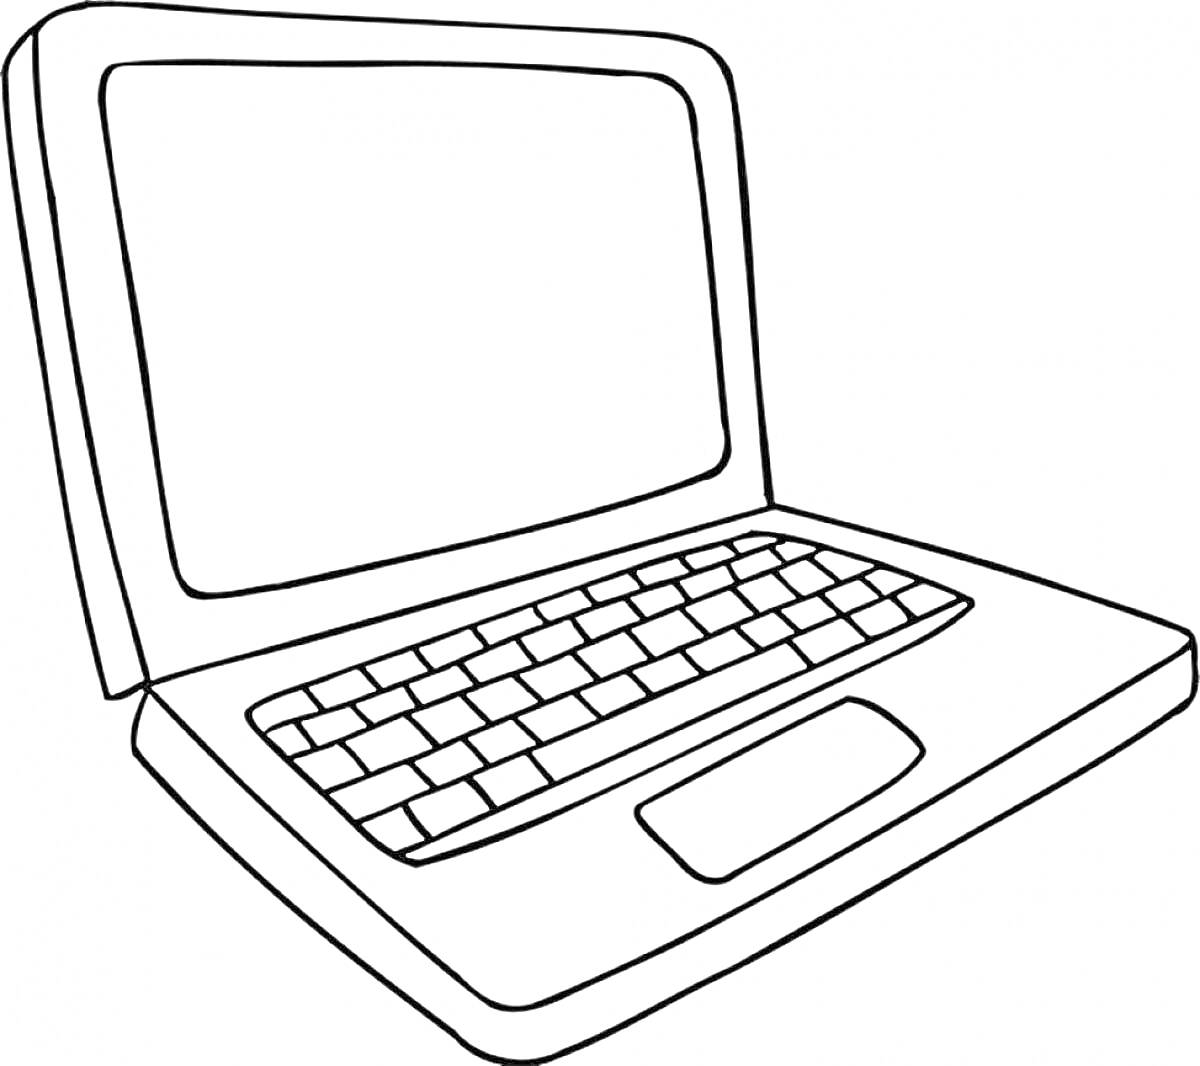 Раскраска Раскраска с изображением ноутбука